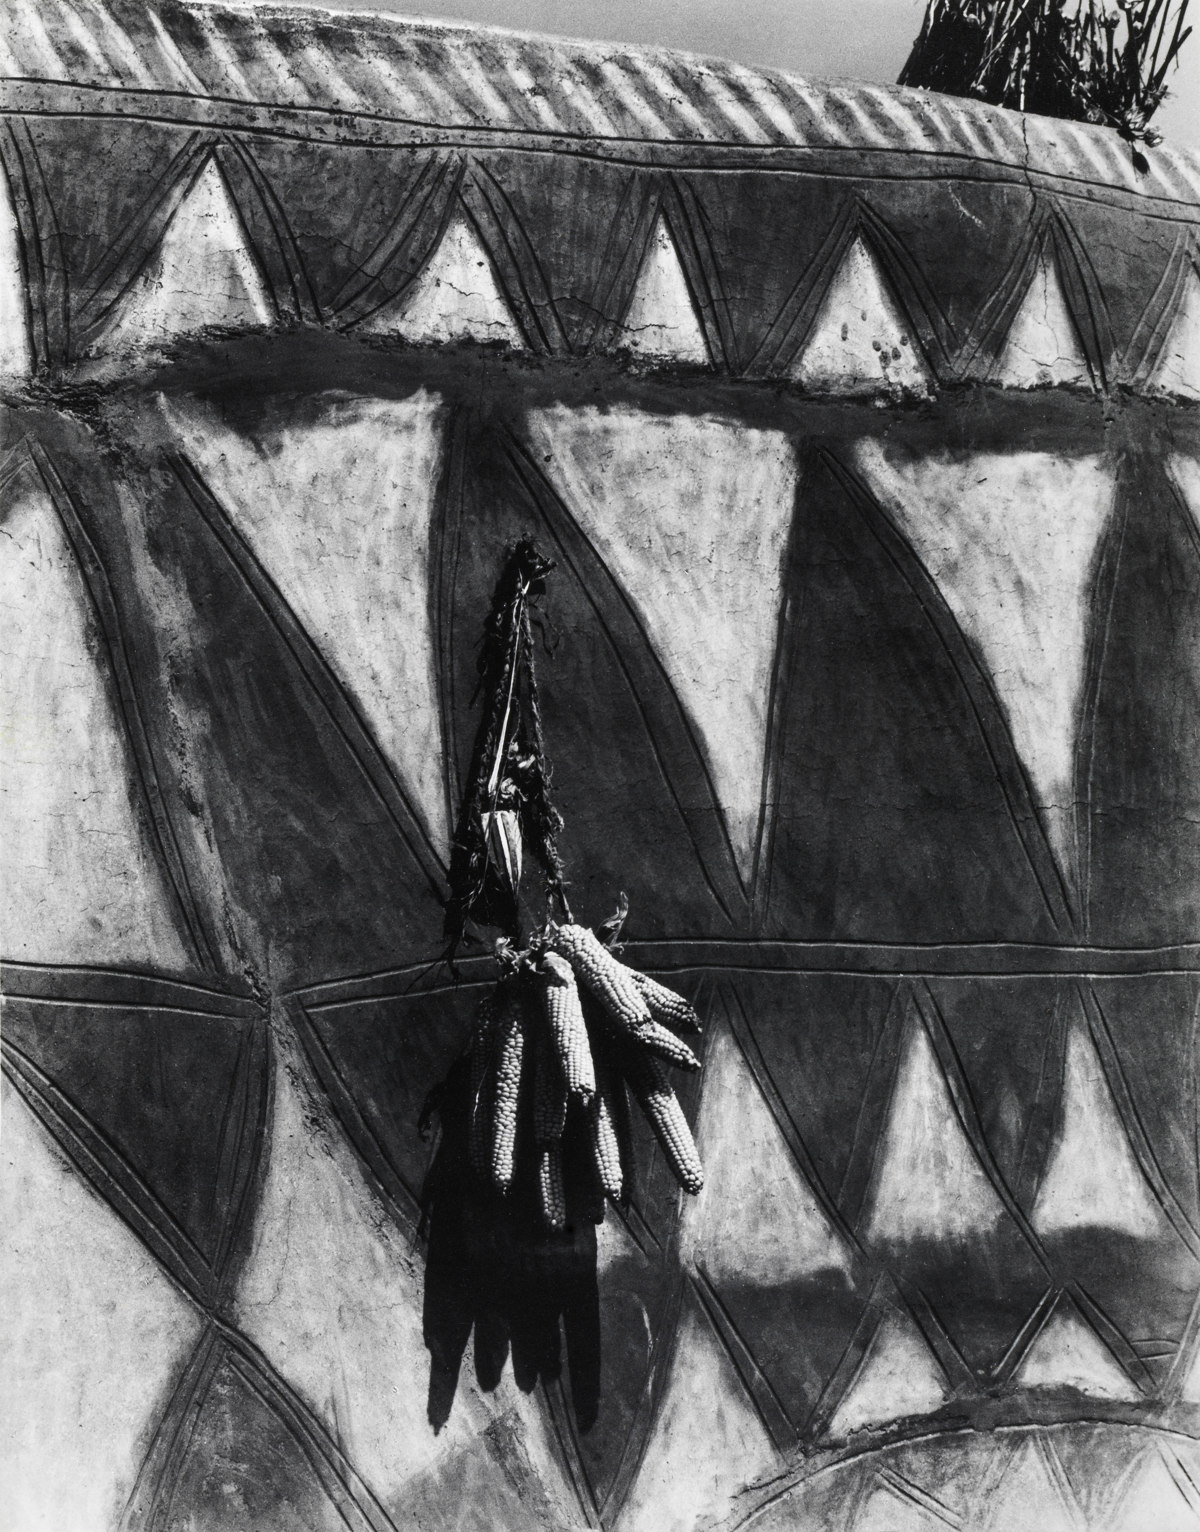 Drying Corn, Compound Paga, Ghana [Maíz secándose, recinto Paga, Ghana] © Aperture Foundation, Inc., Paul Strand Archive © COLECCIONES Fundación MAPFRE